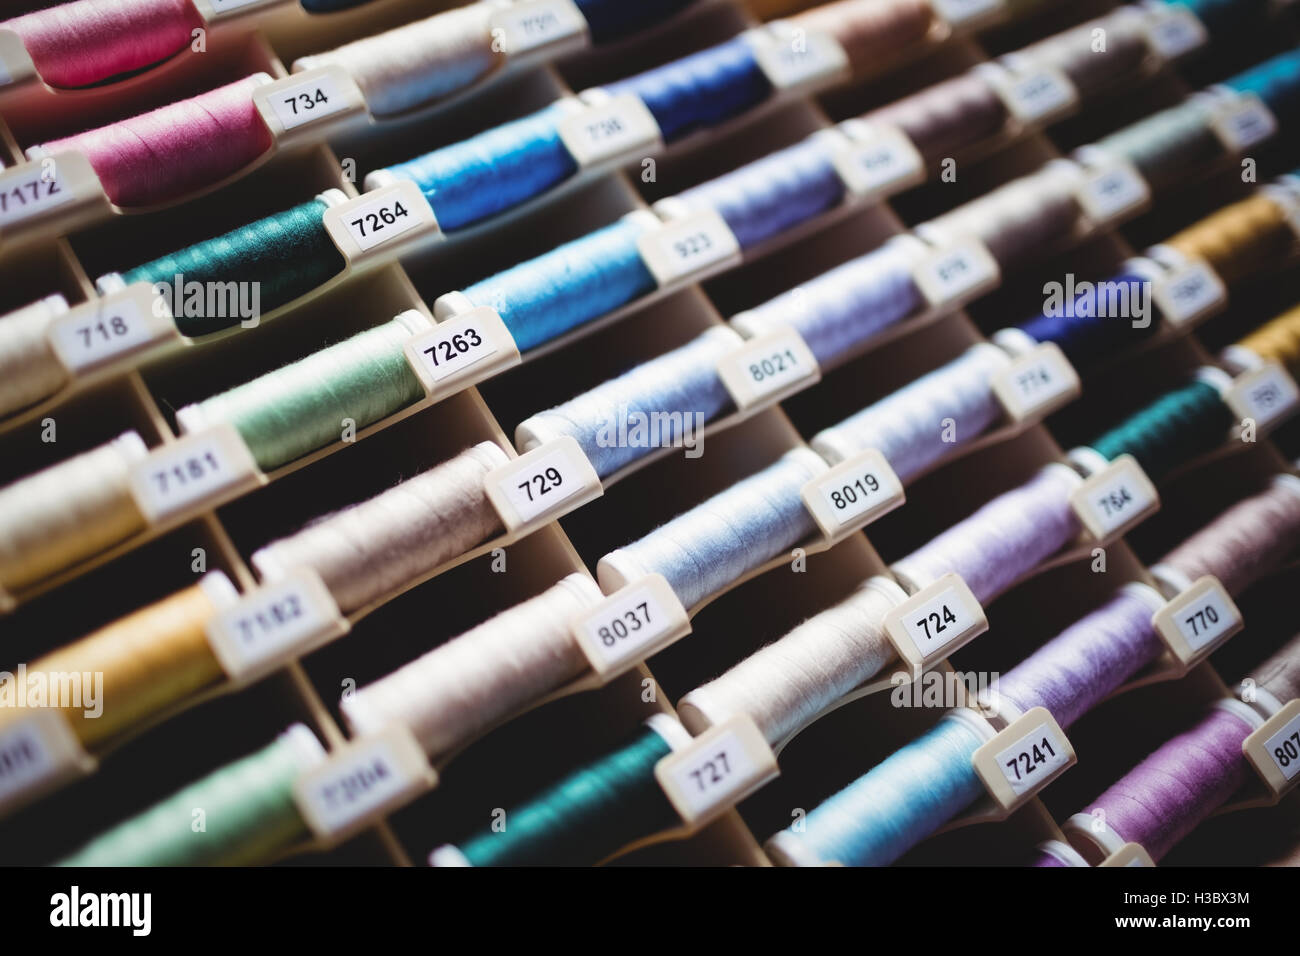 Colorful spools of thread Stock Photo